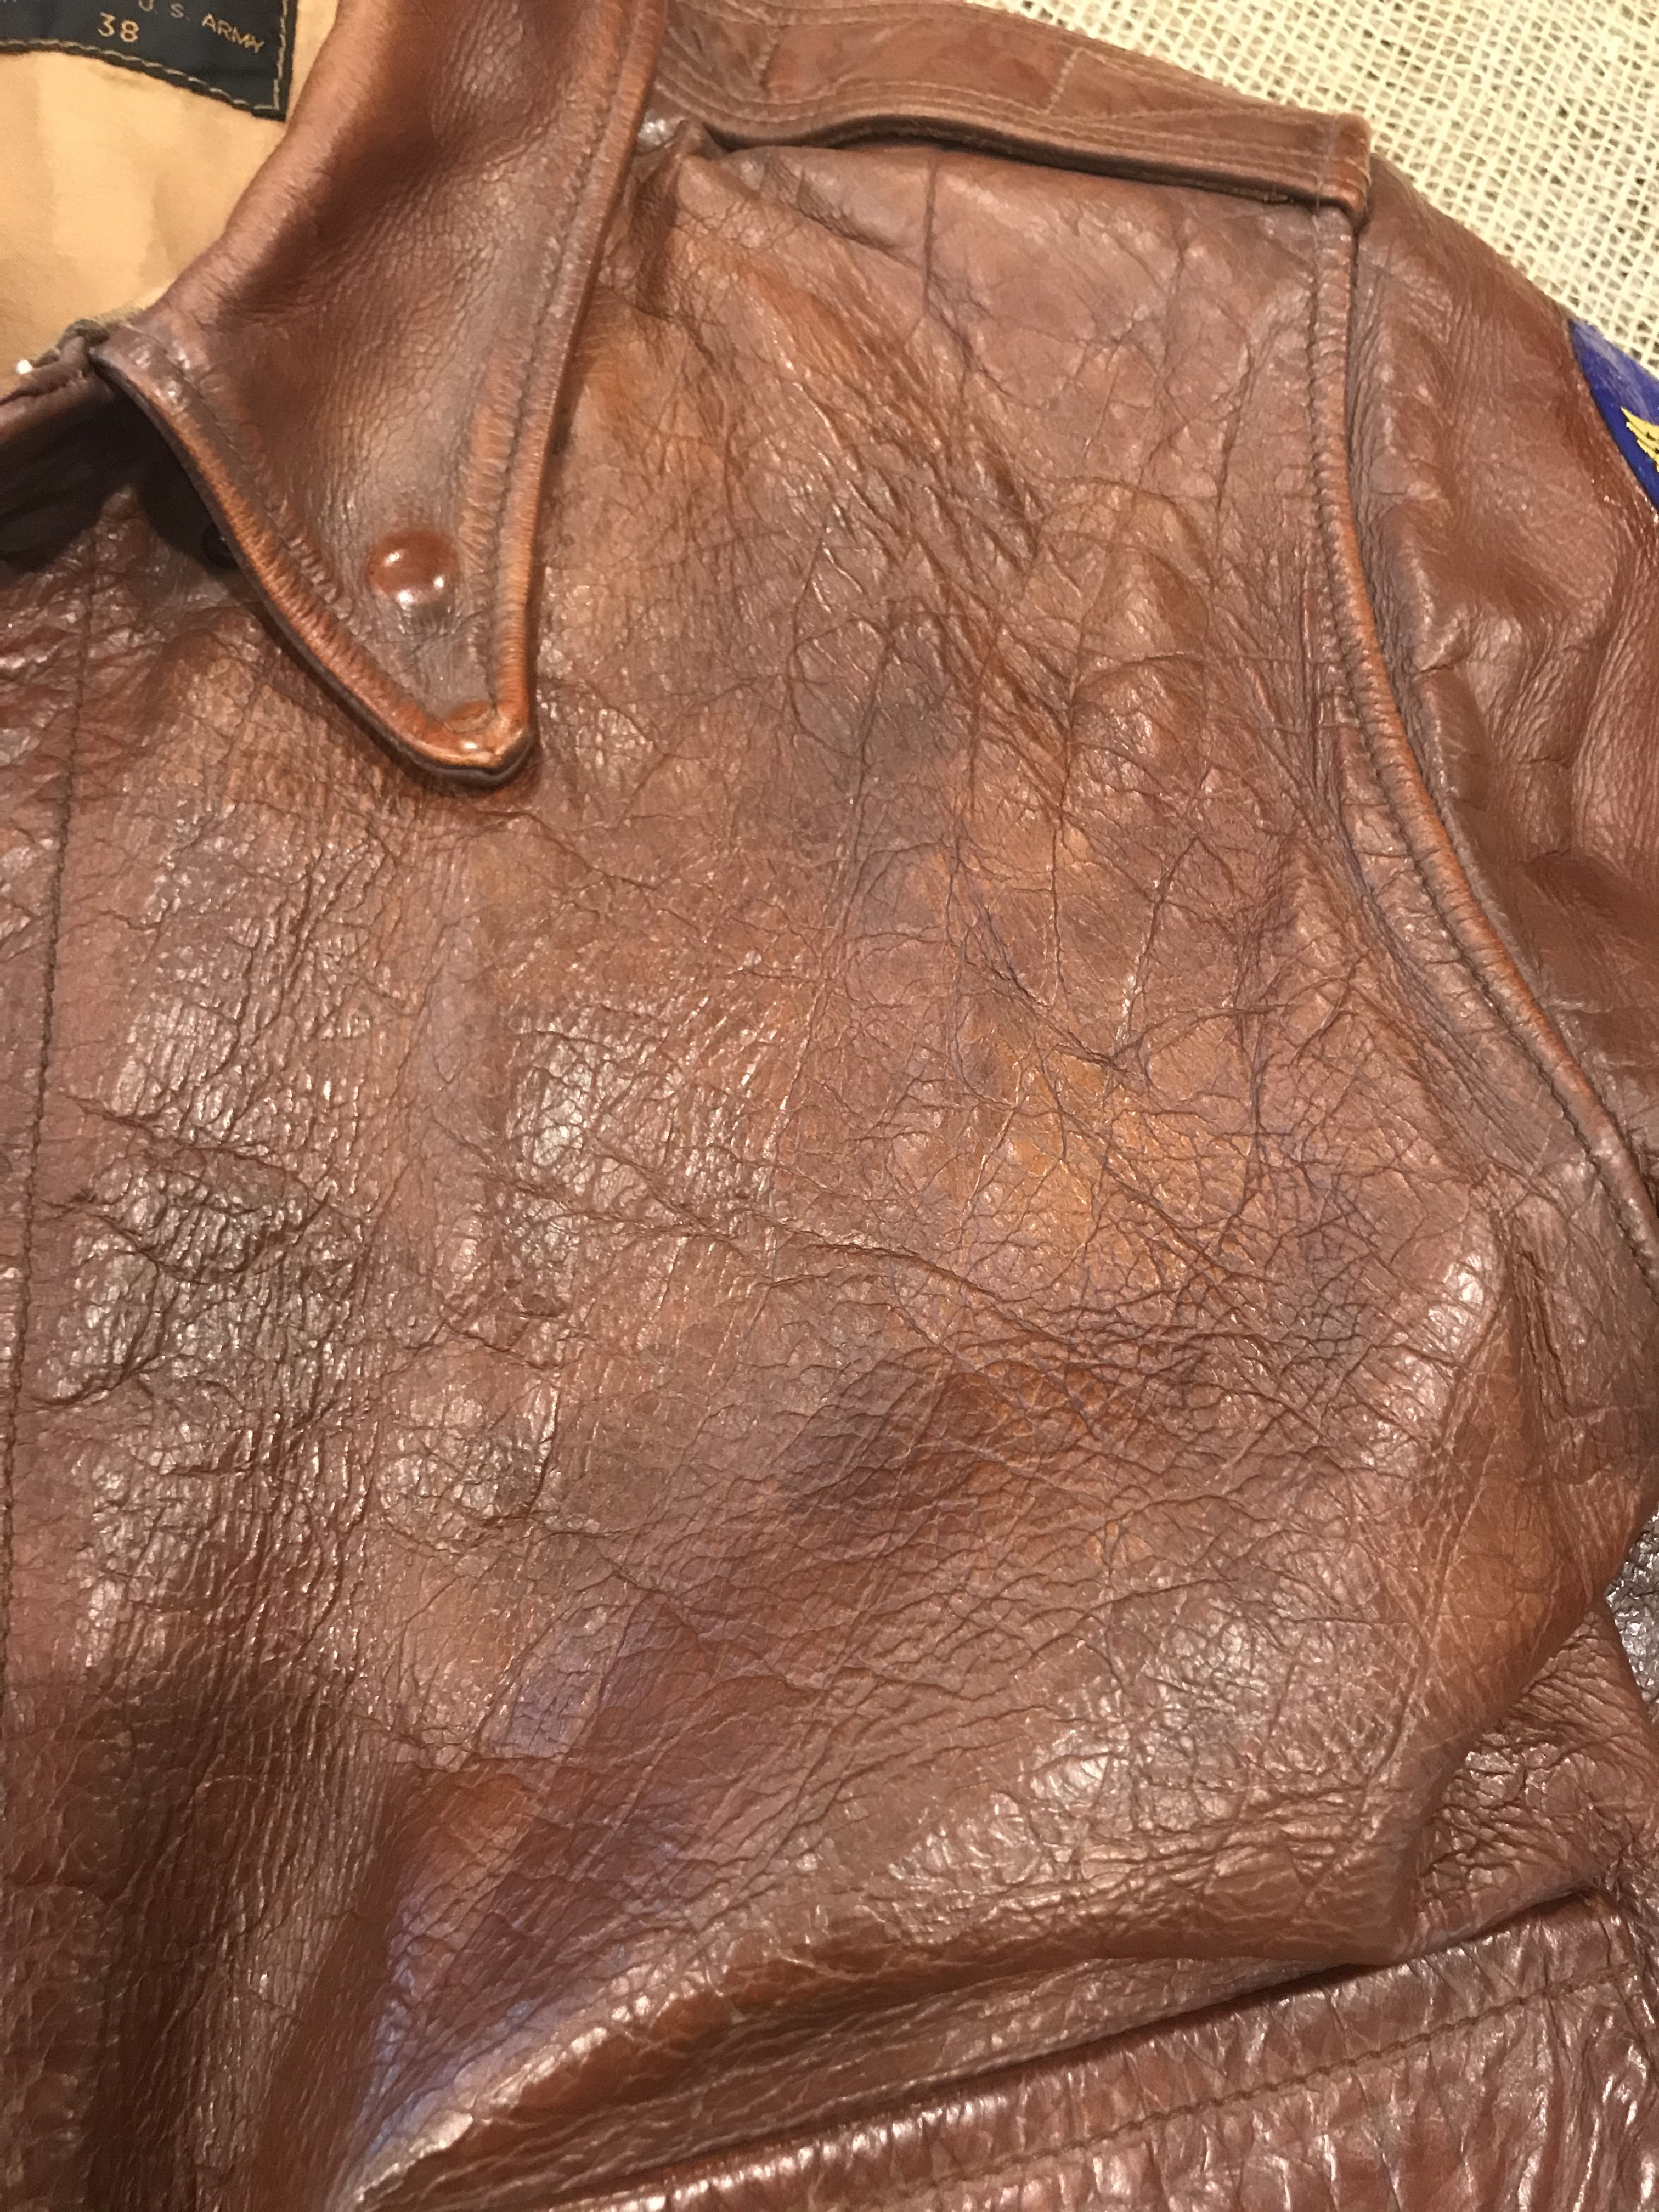 Bill Kelso - Aero 16160 Chennault | Vintage Leather Jackets Forum